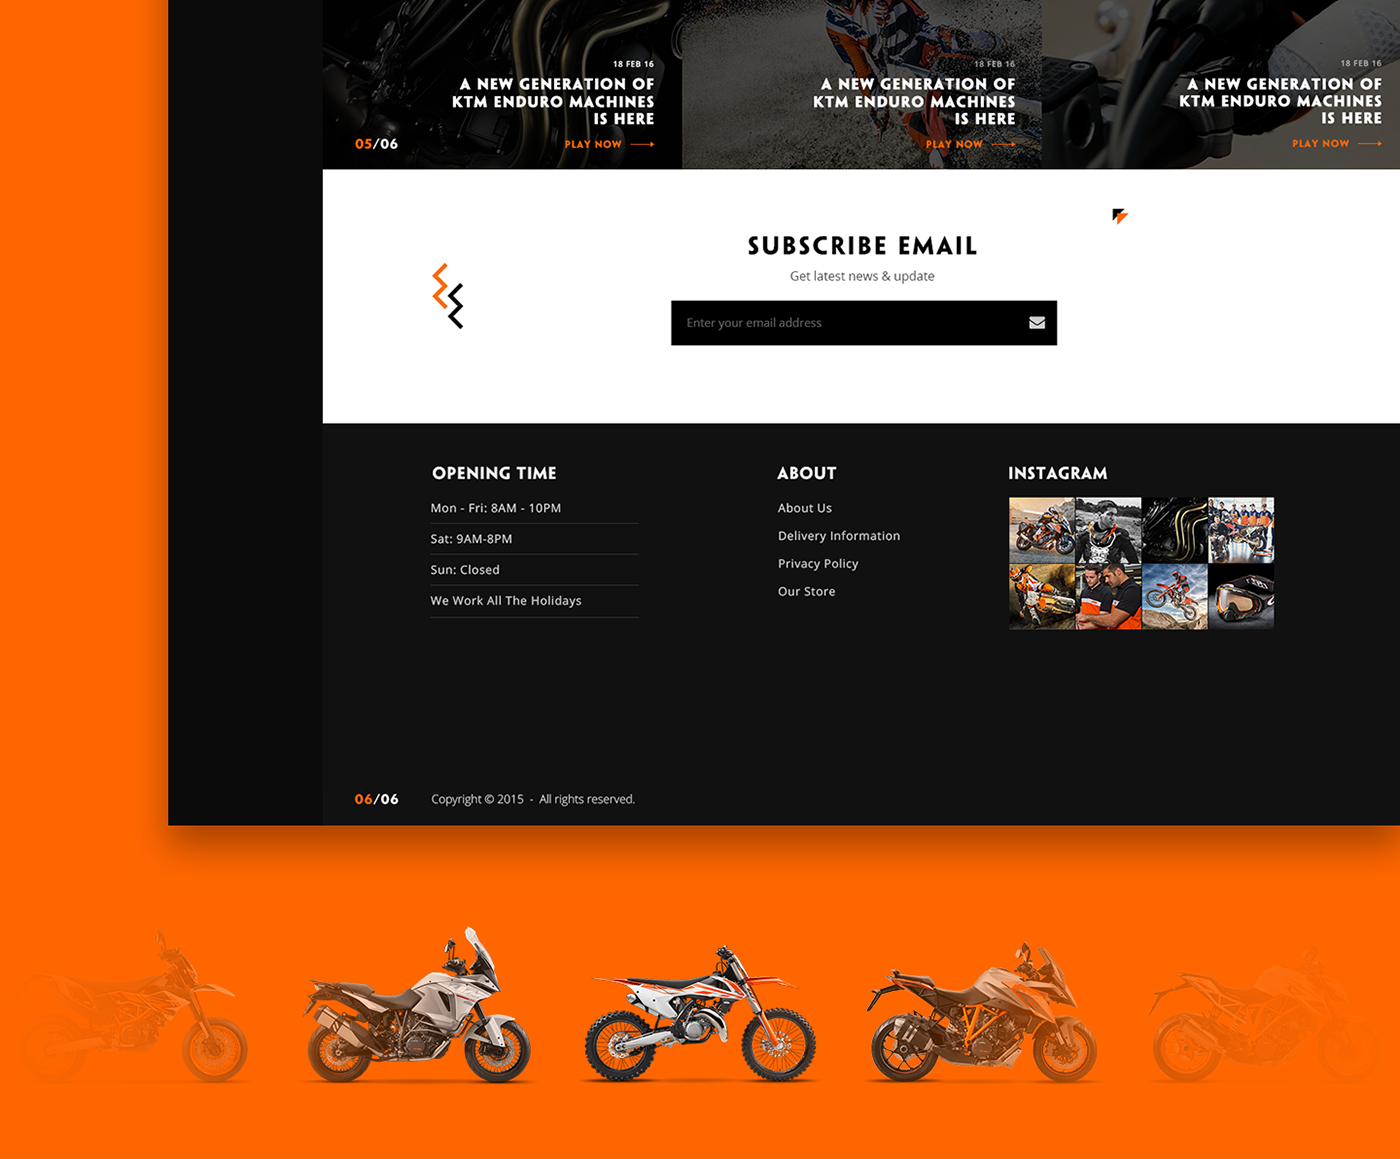 uiux website redesign ktm moto Motor show ktm redesign oranges flat design ios 10 material UI Interface weeds brand